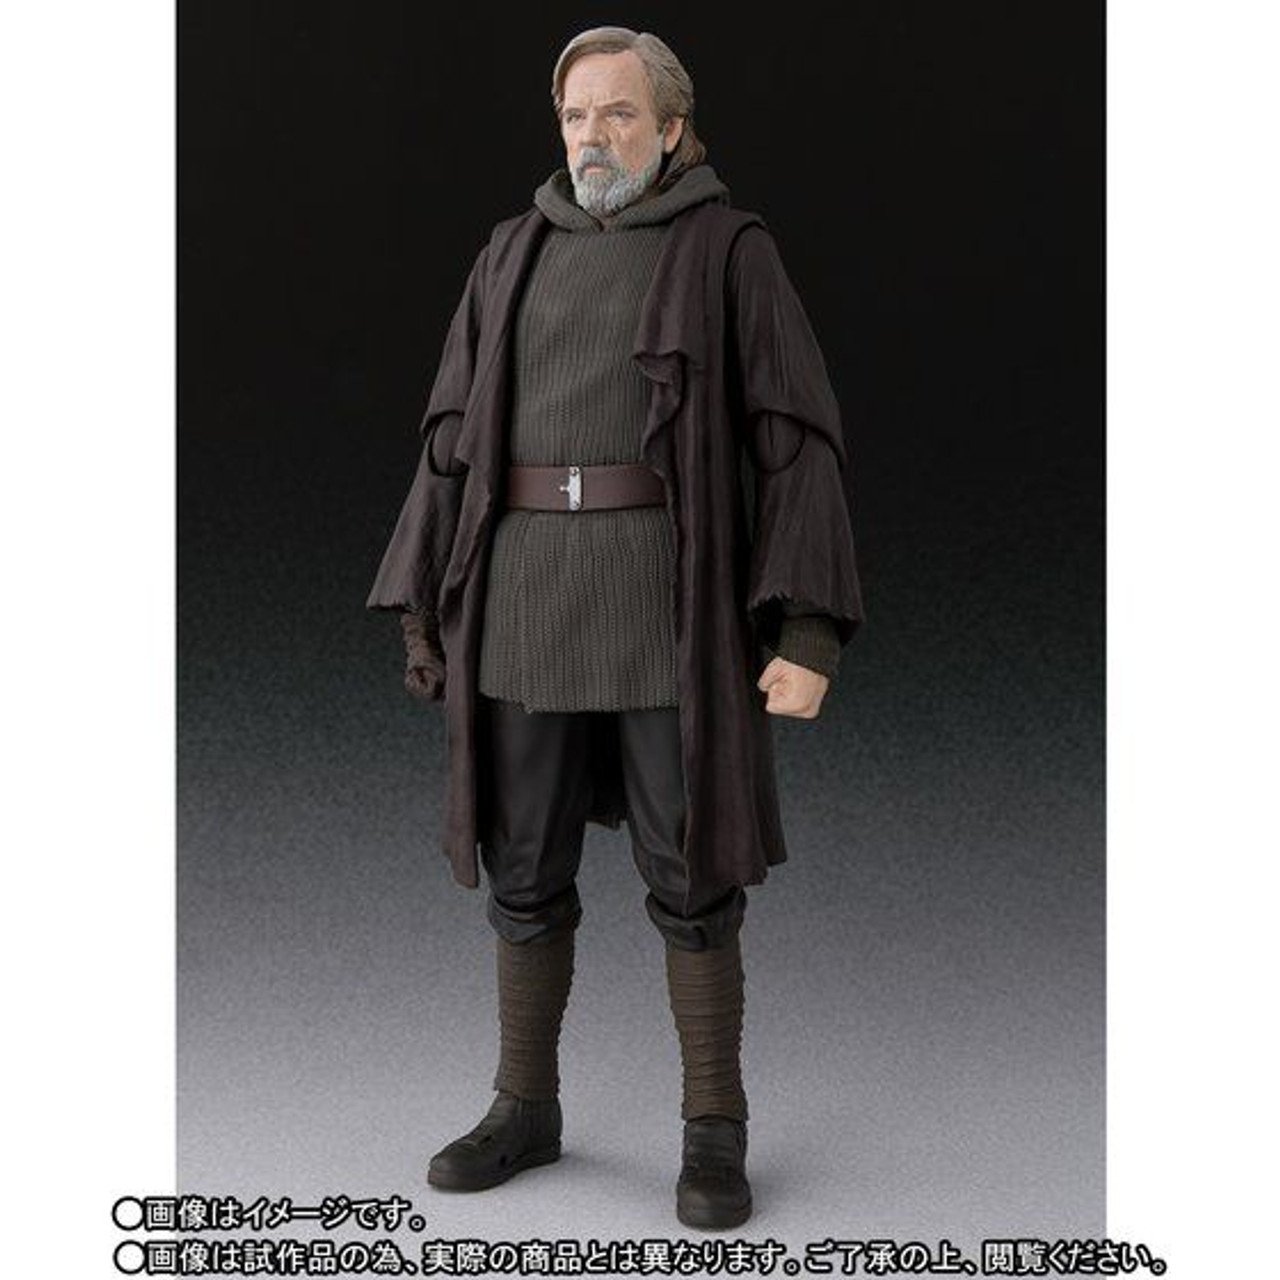 Bandai S.H. Figuarts Luke Skywalker Battle of Crait Ver. (Start Wars The  Last Jedi) anime action figures model toys for children - AliExpress